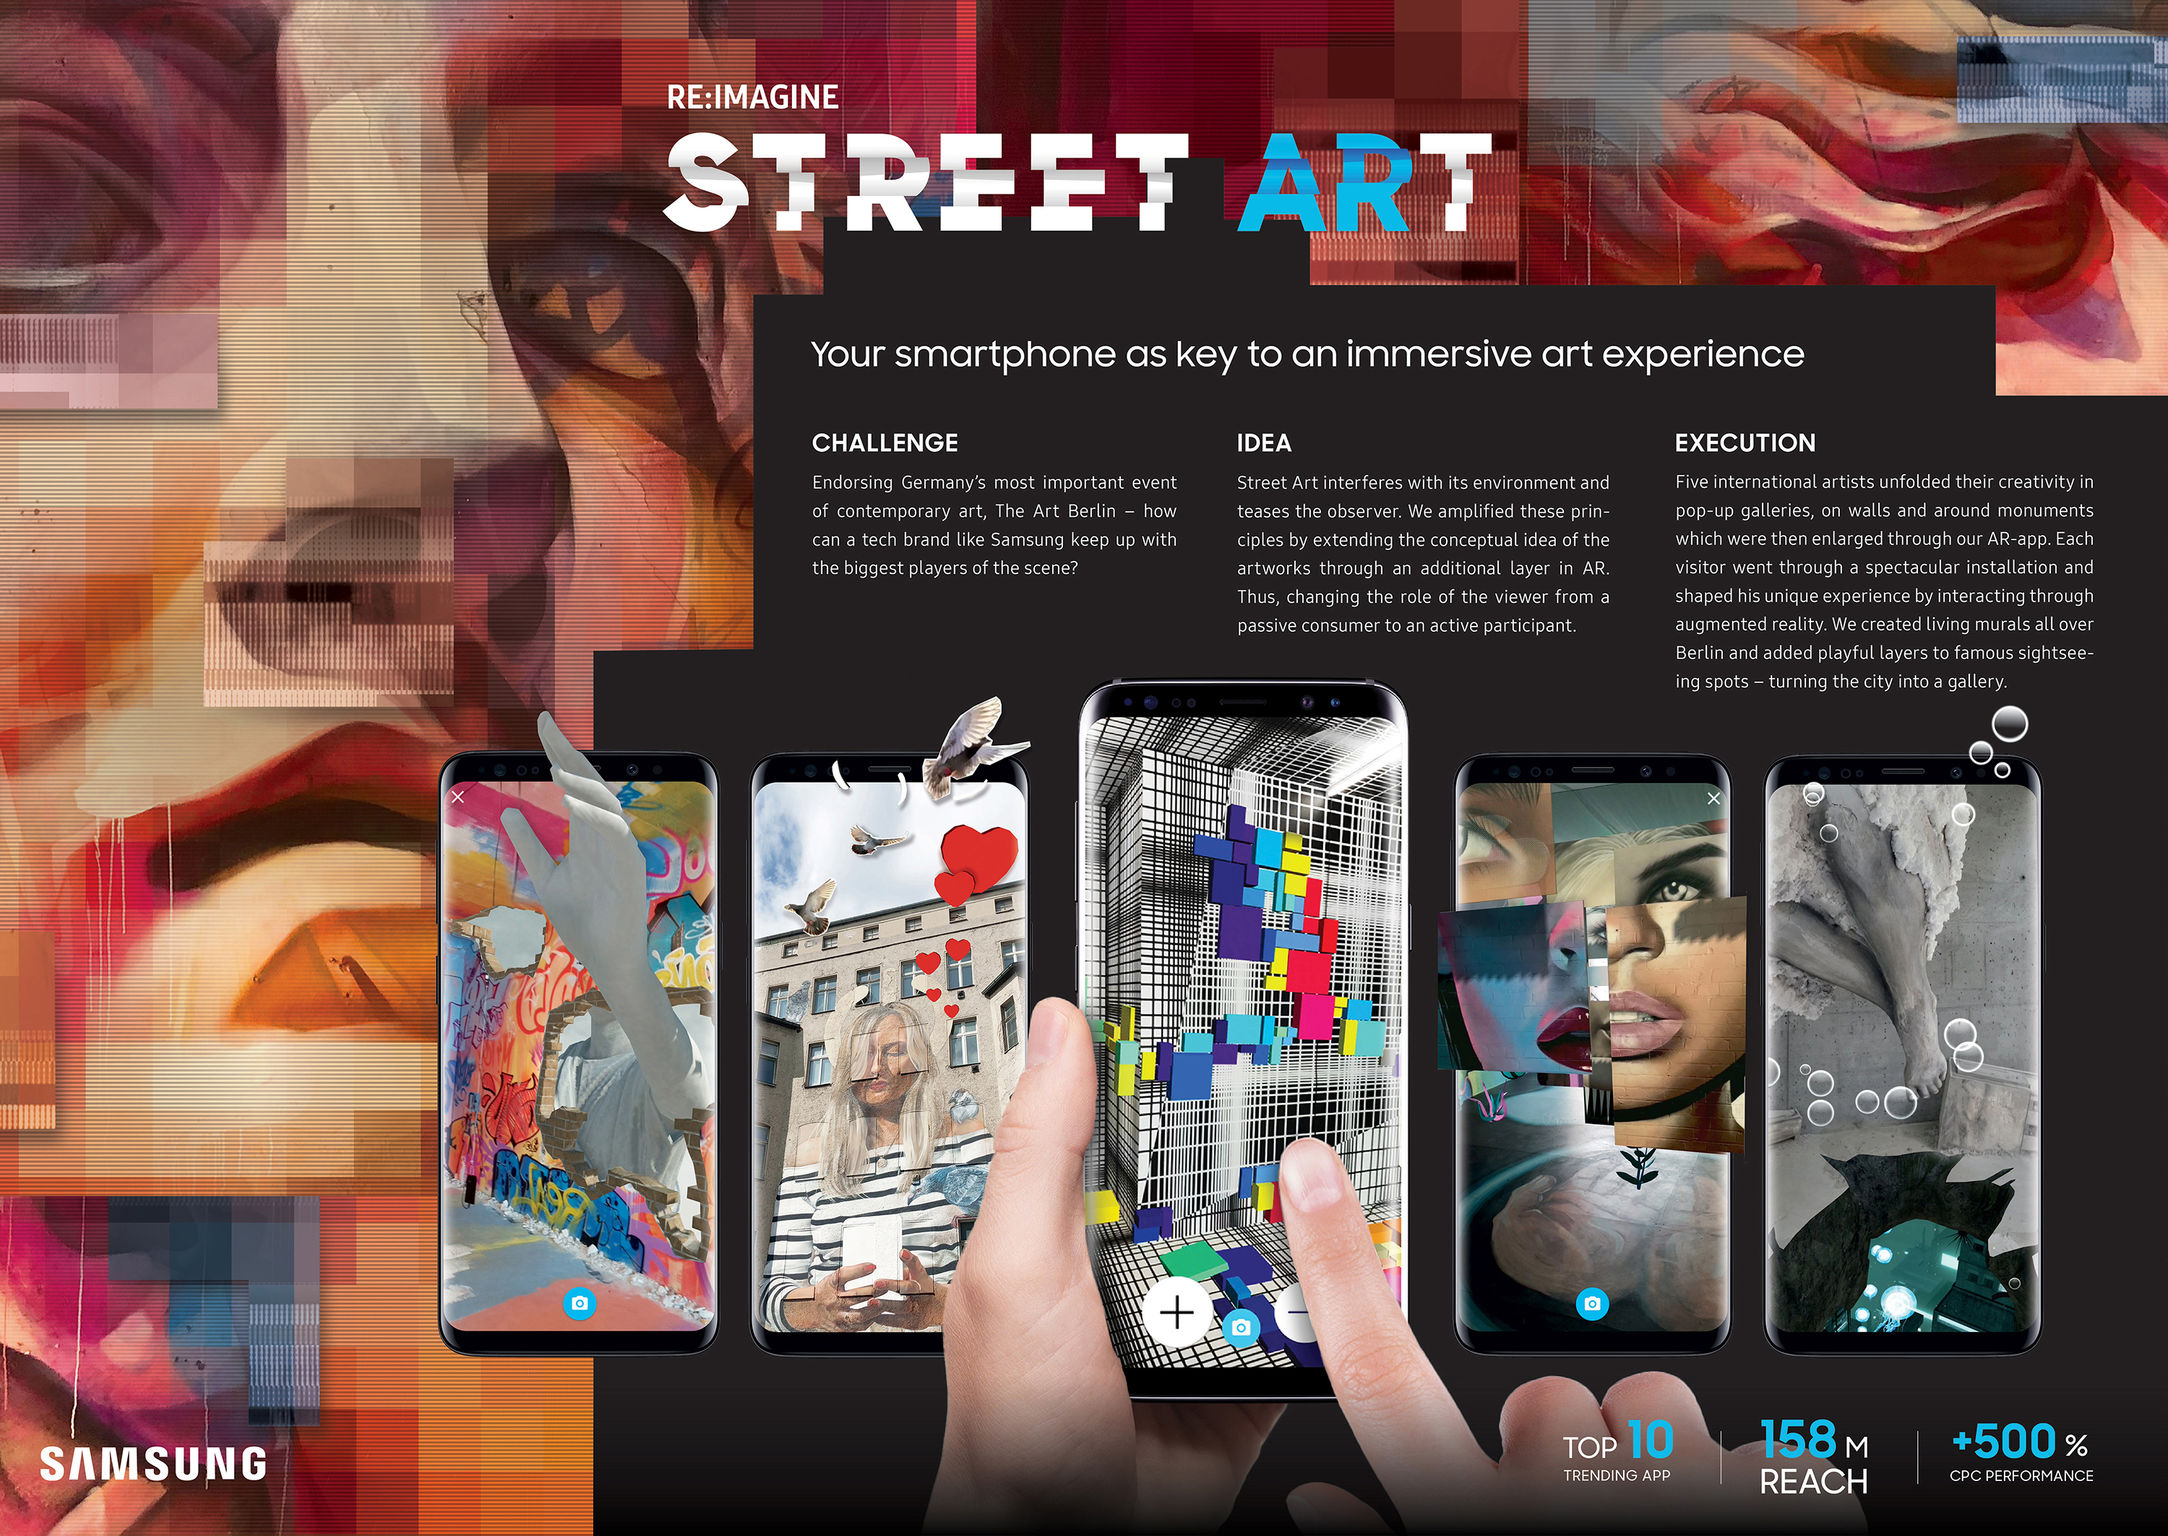 Re:imagine Street ARt